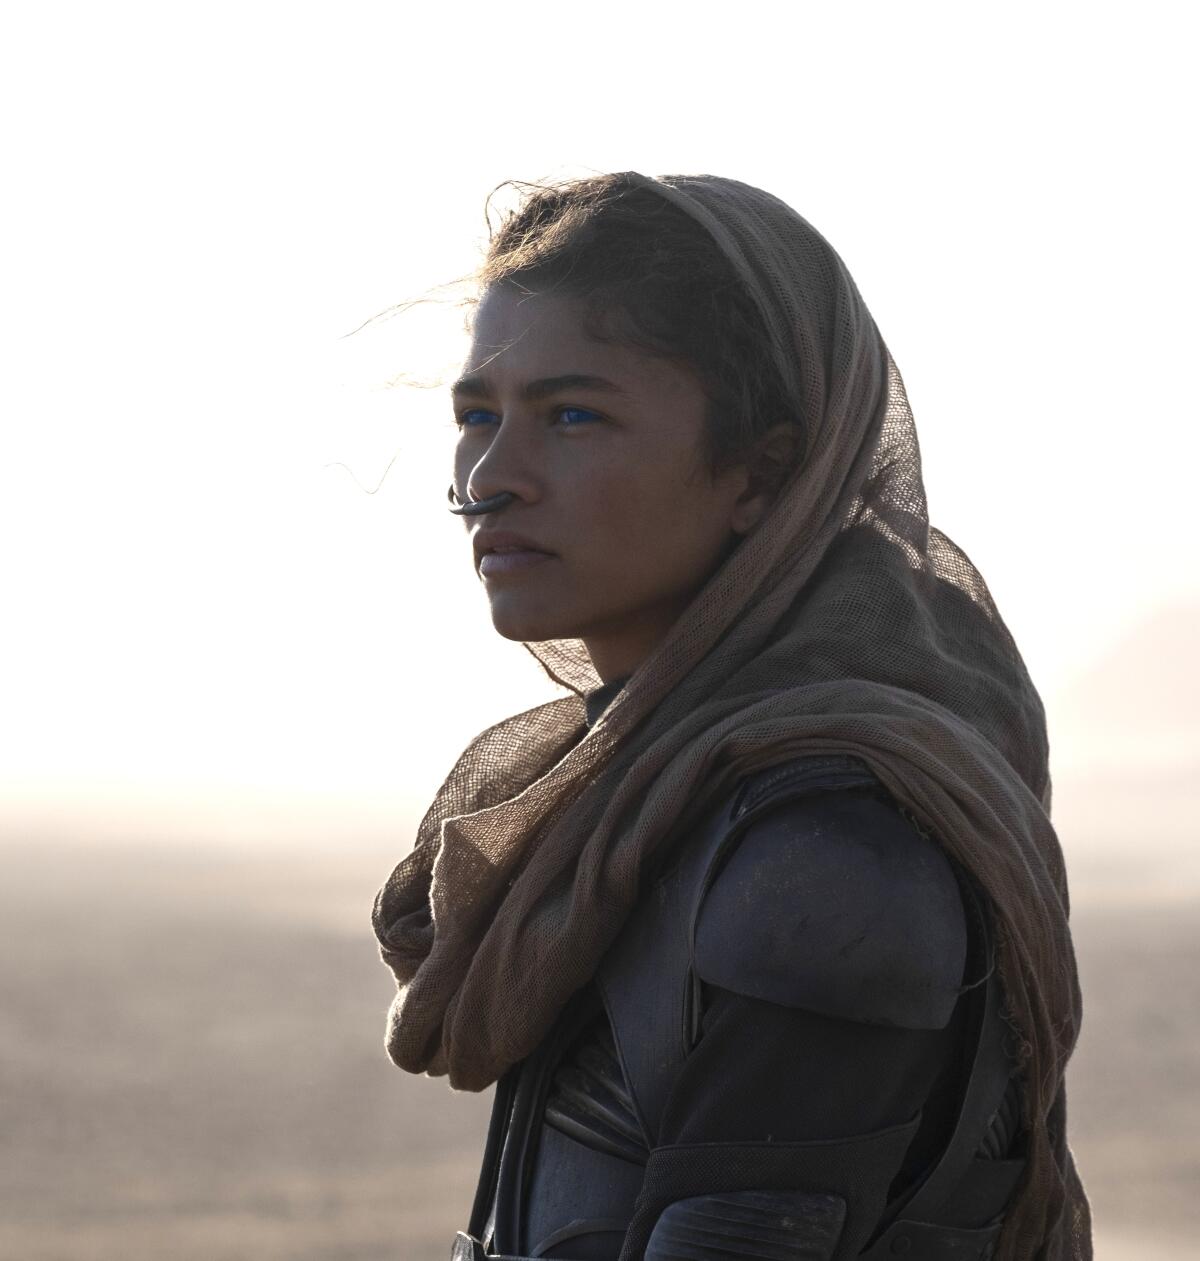 Zendaya in a desert wearing a tan headscarf, bodysuit and nose tube